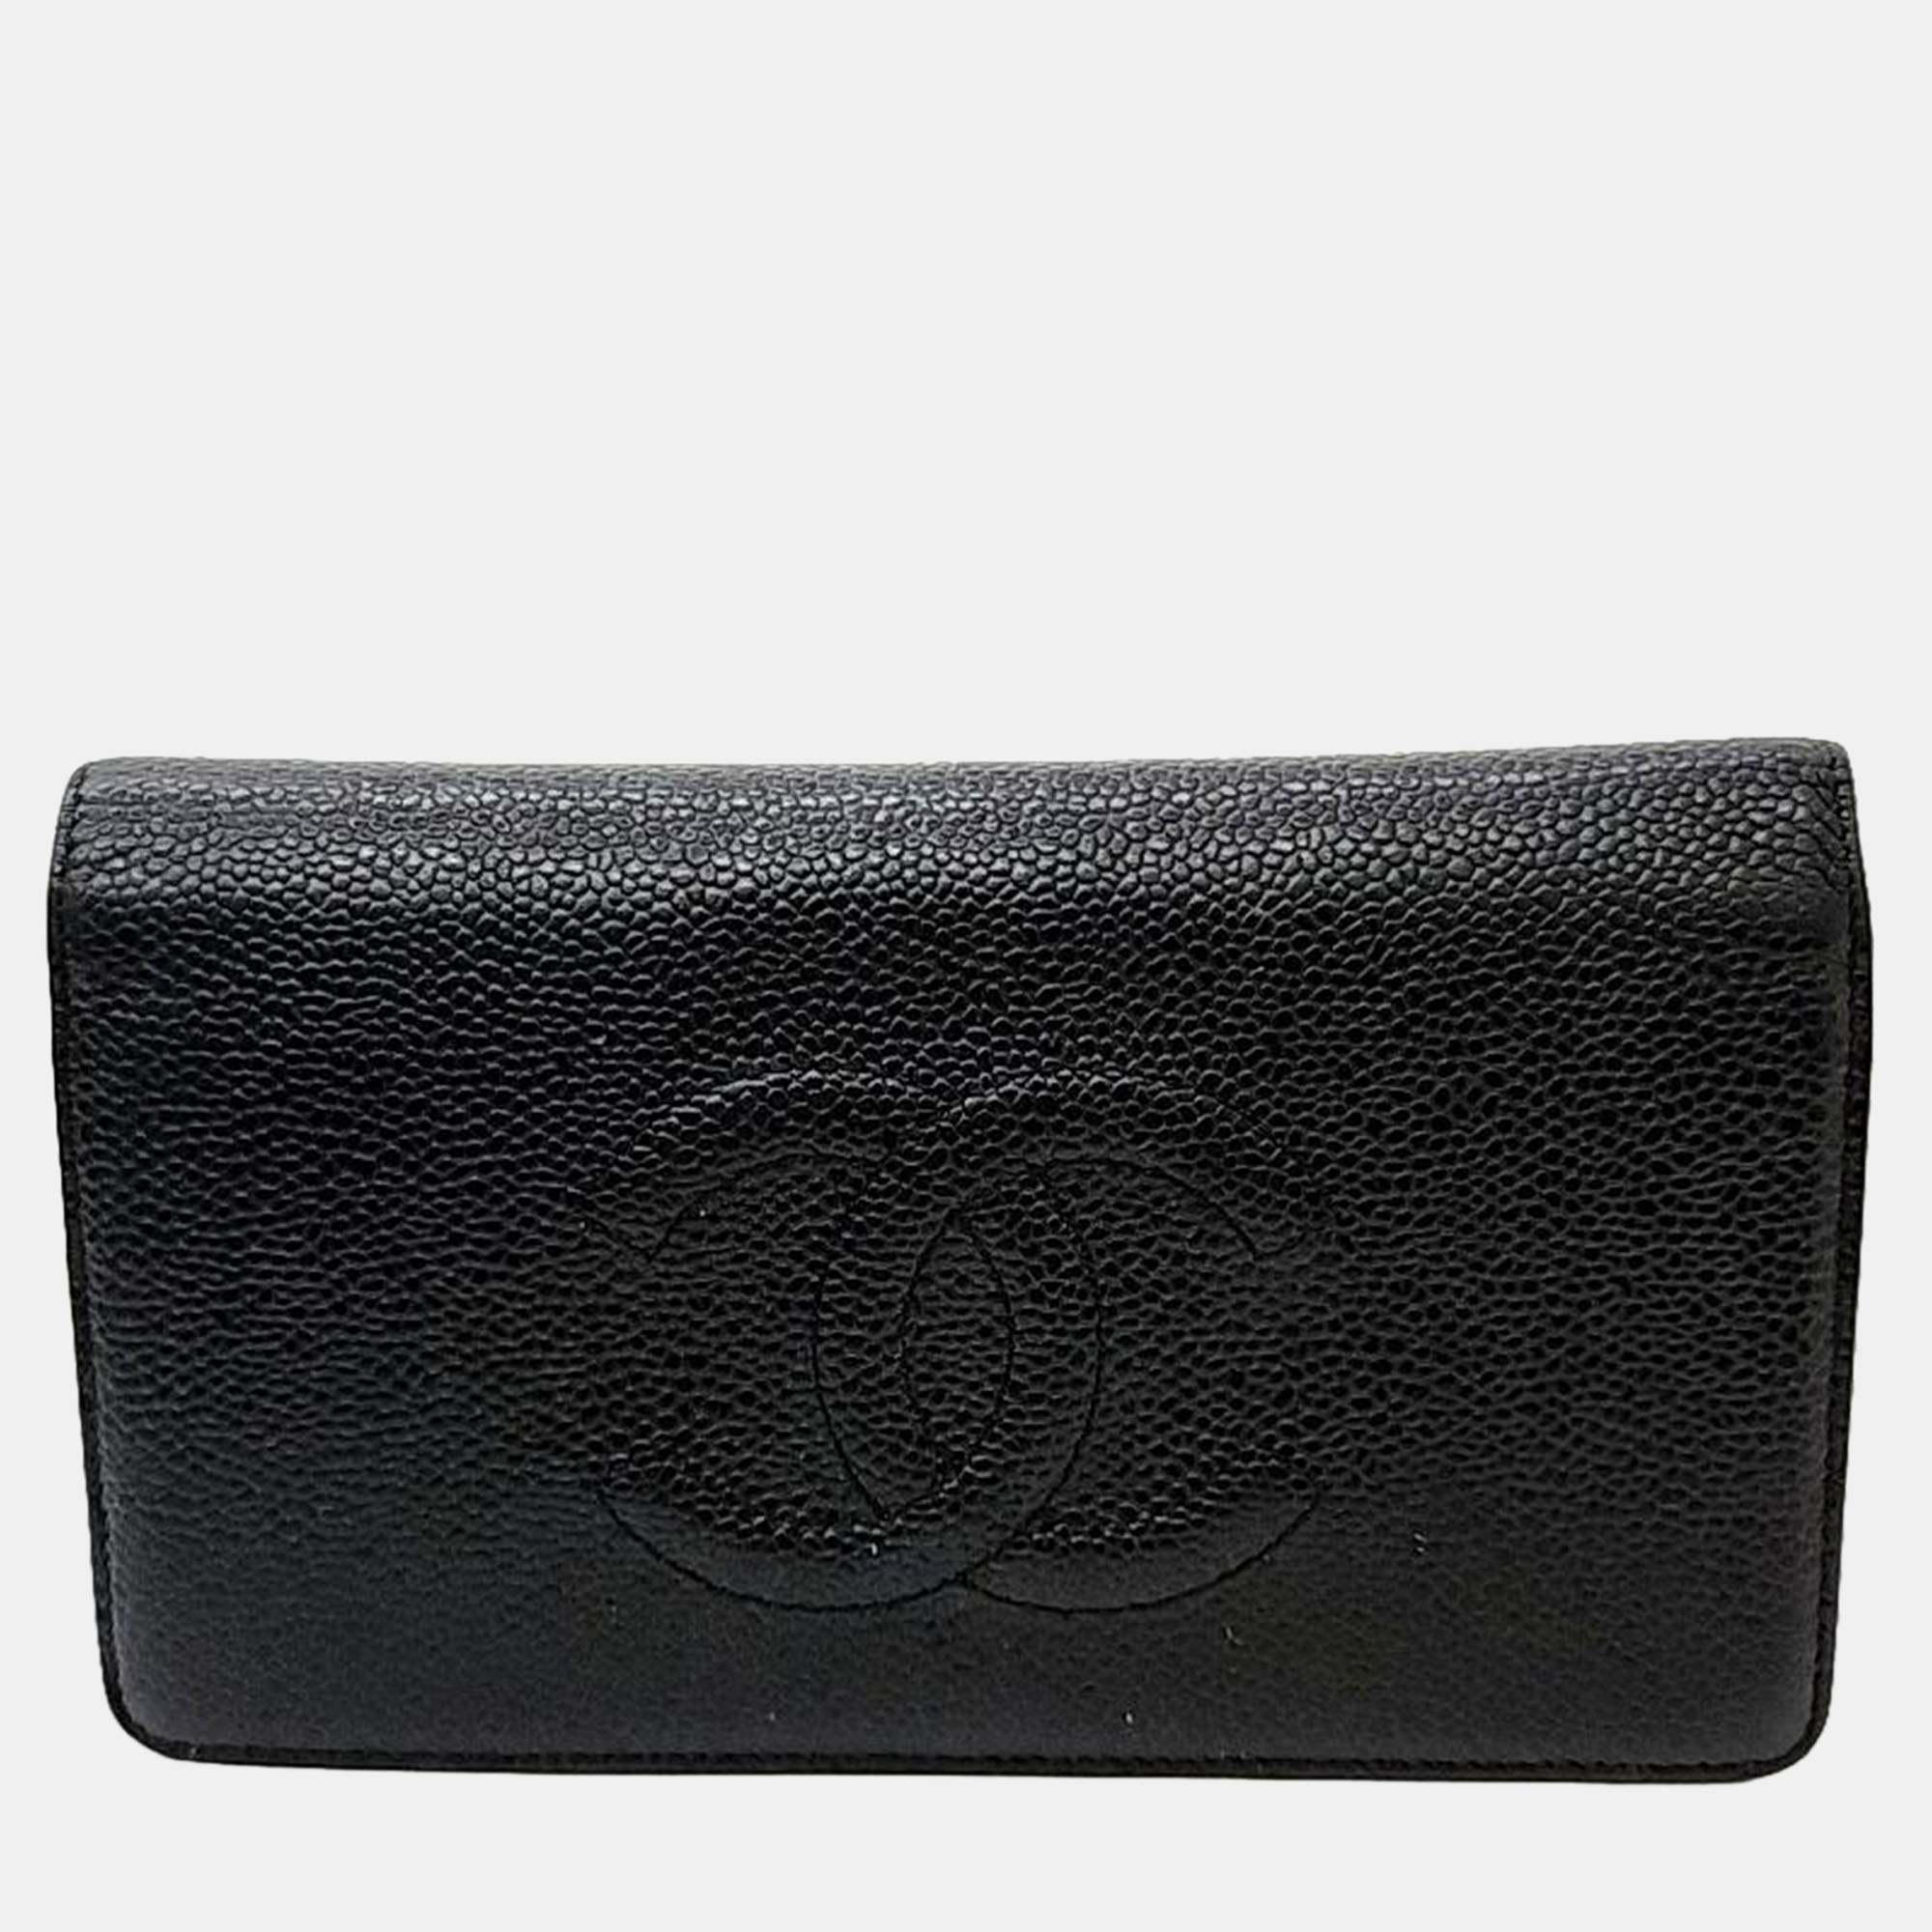 Chanel black caviar long wallet